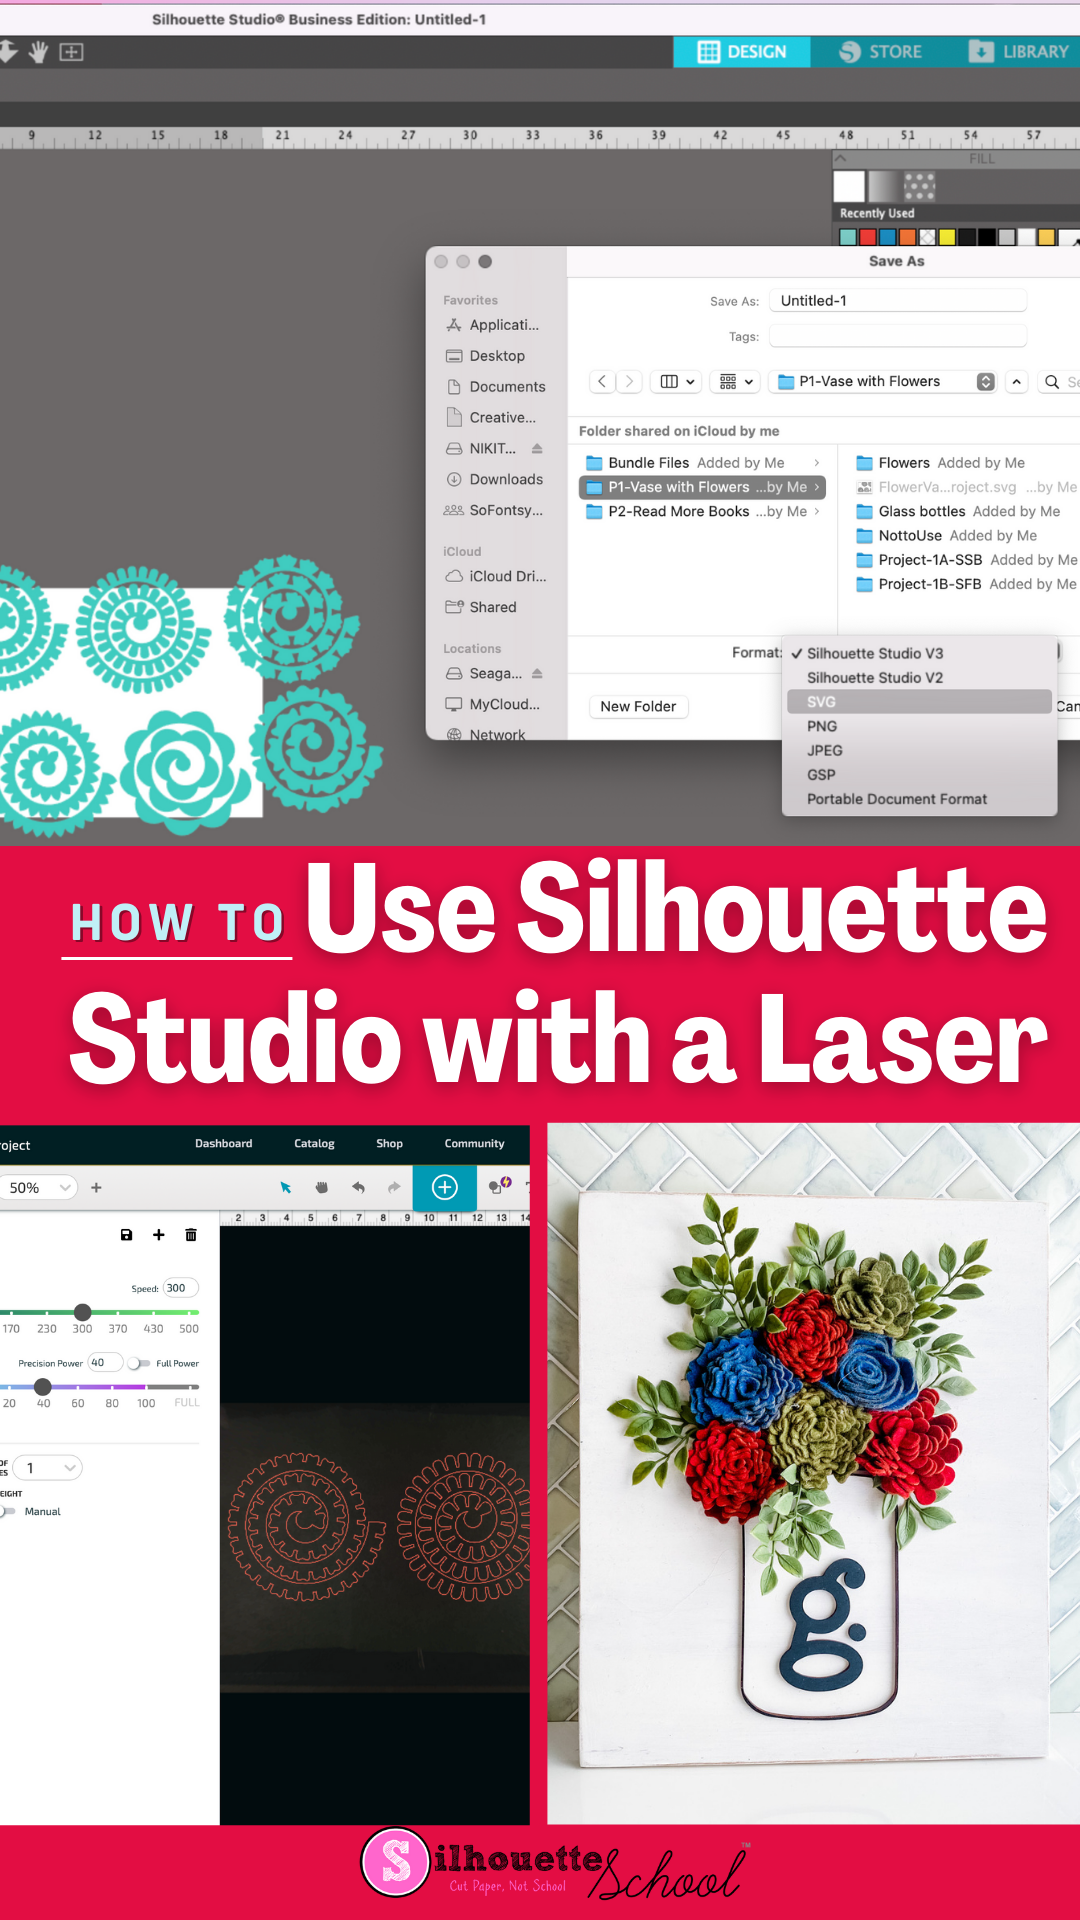 silhouette 101, silhouette america blog, laser cutter, laser cutter and silhouette, silhouette studio business edition